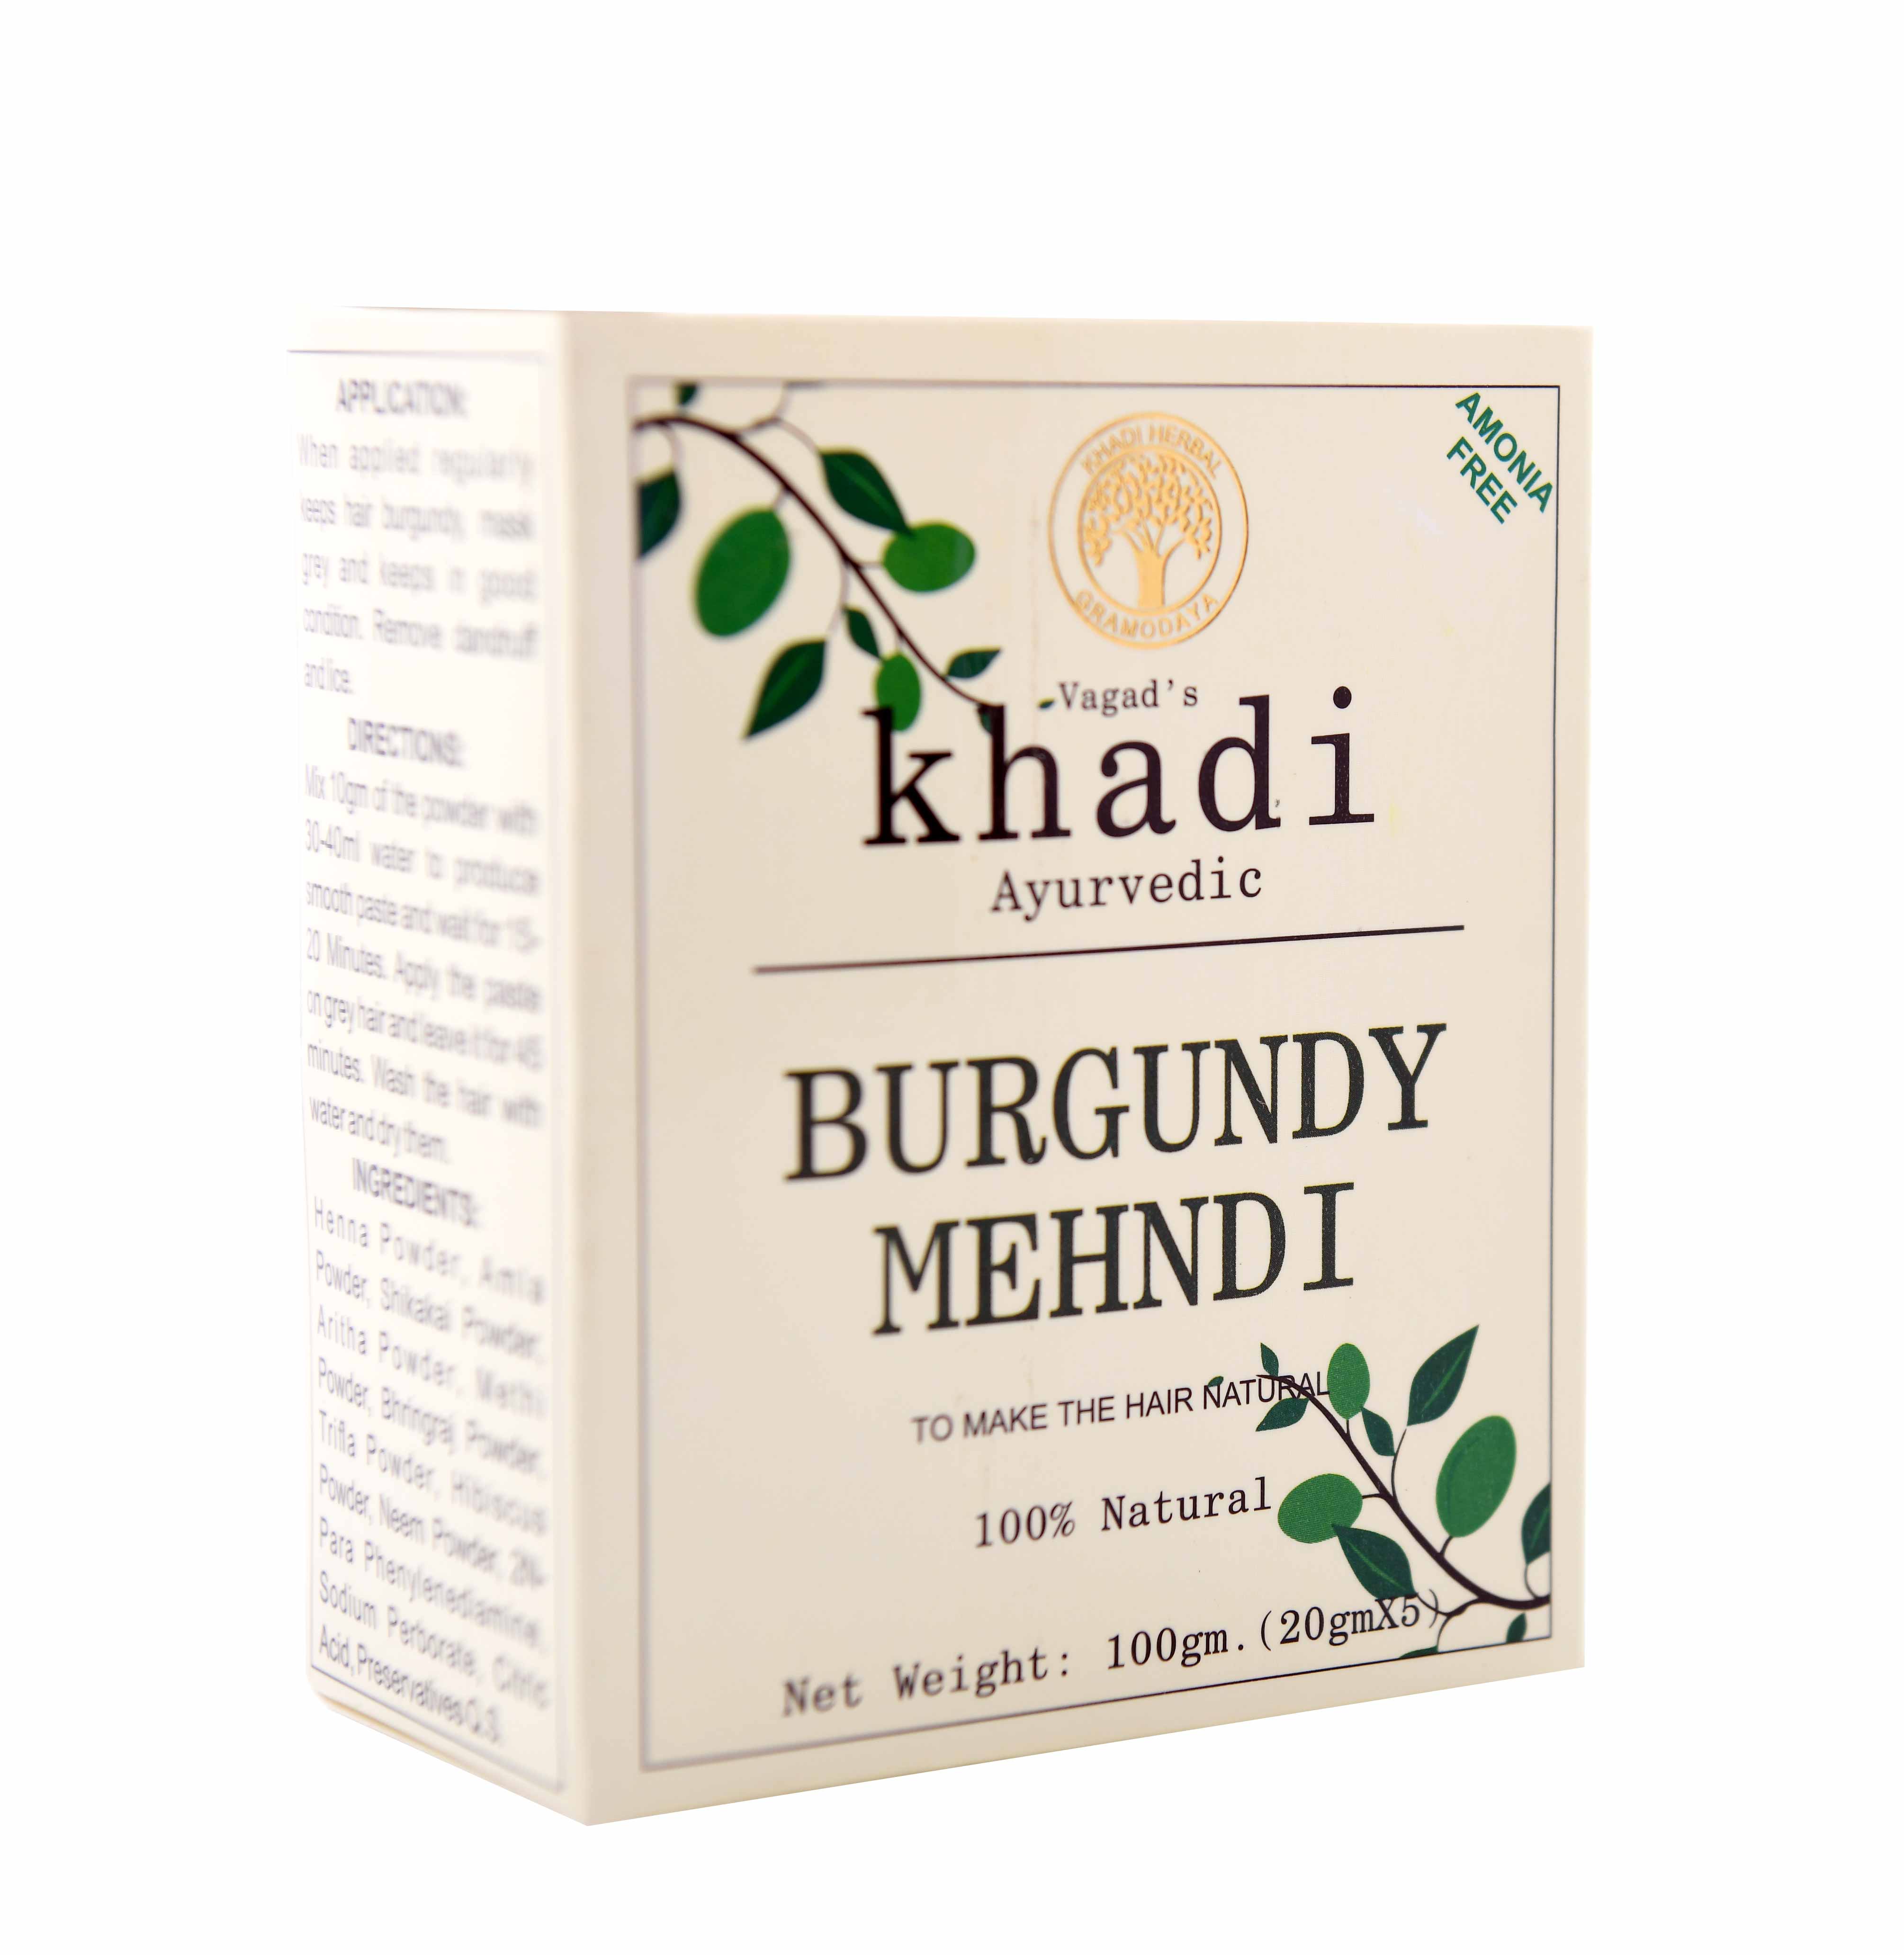 Buy Vagad's Khadi Burgundy Mahendi Powder at Best Price Online